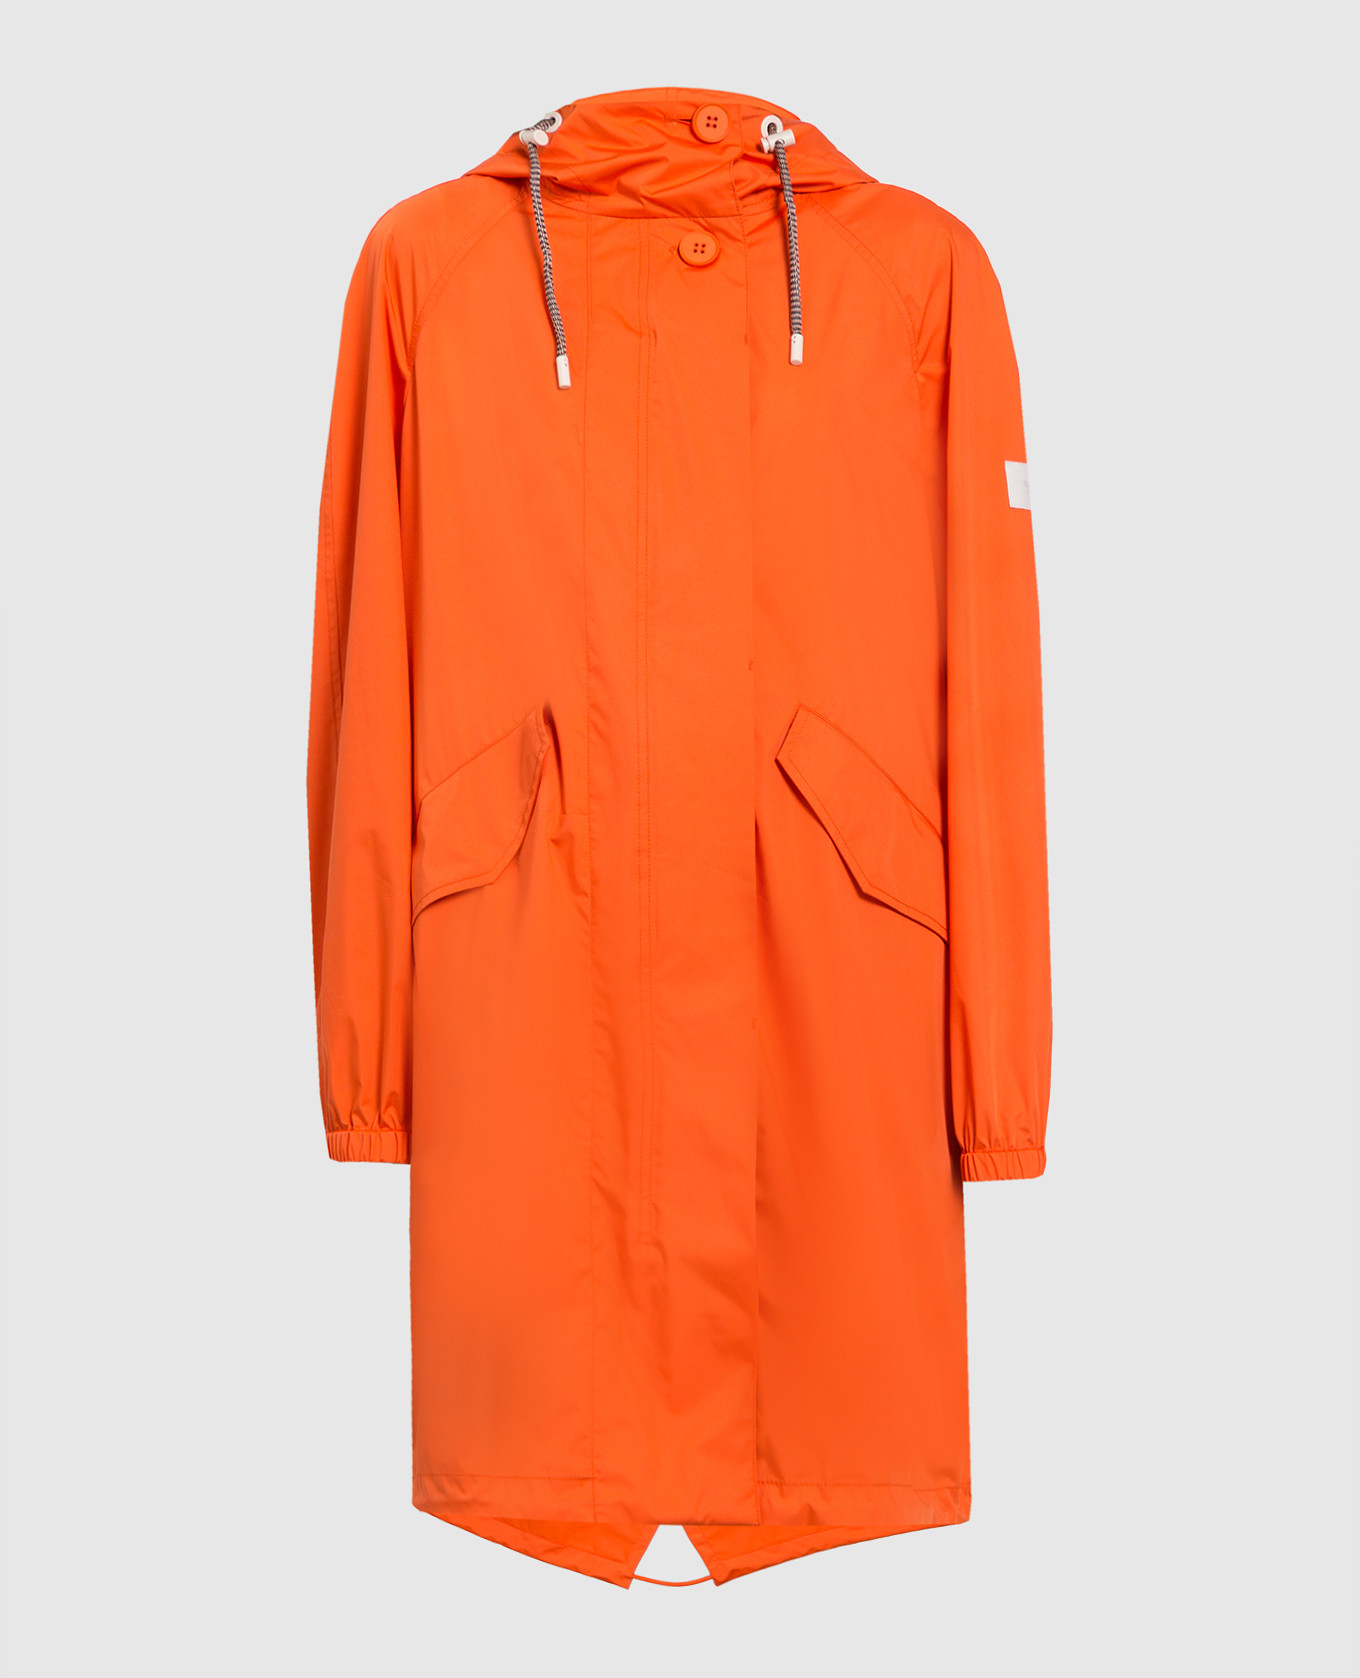 Orange raincoat with logo patch